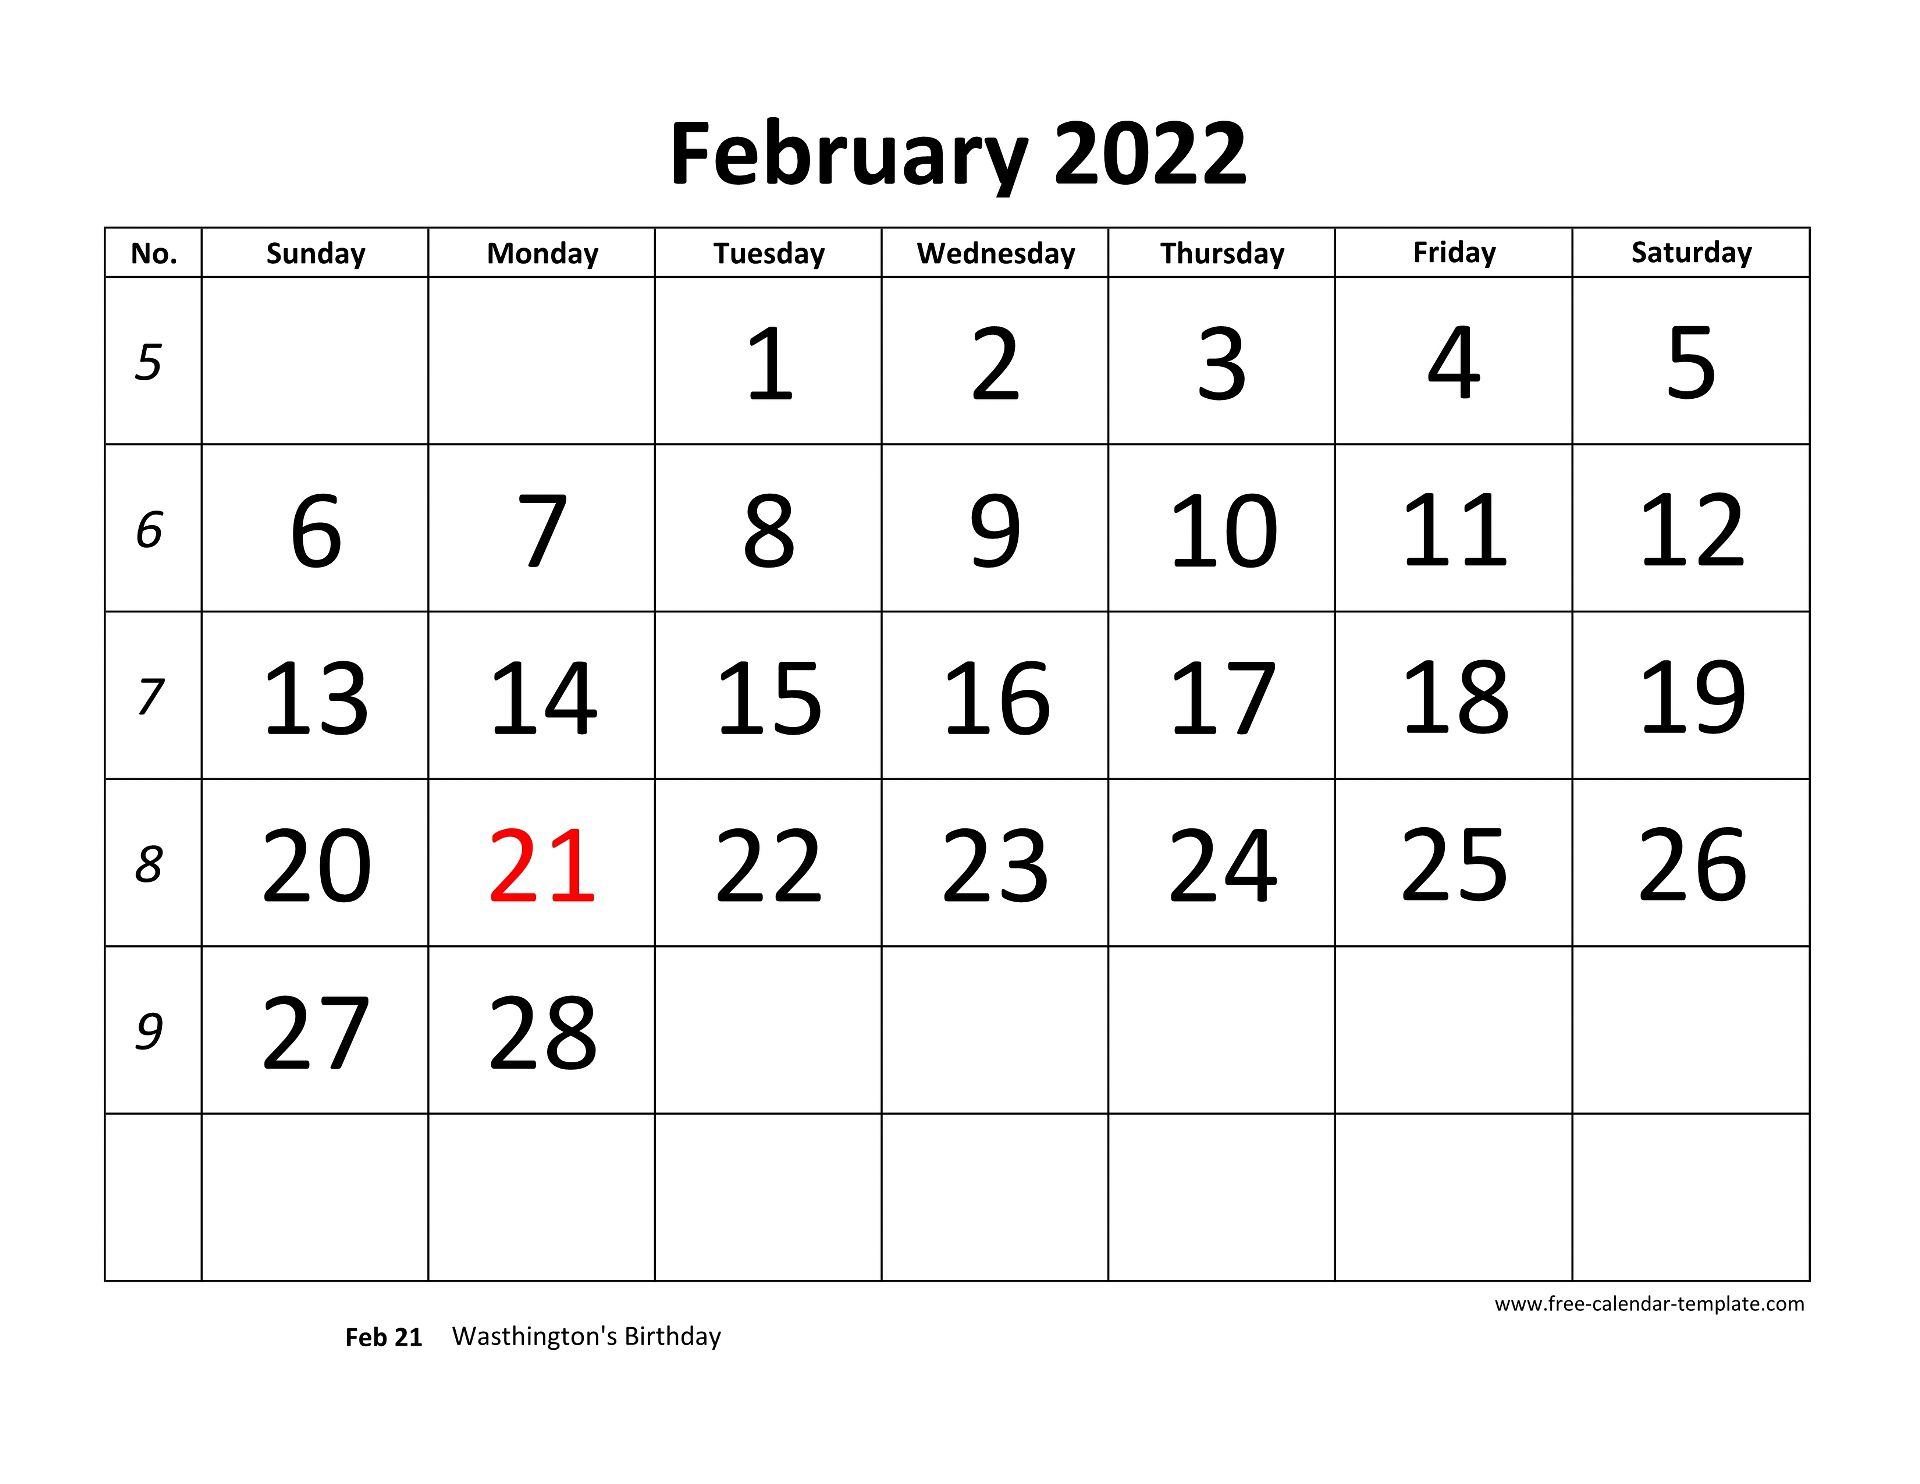 february 2022 free calendar tempplate free calendar 3